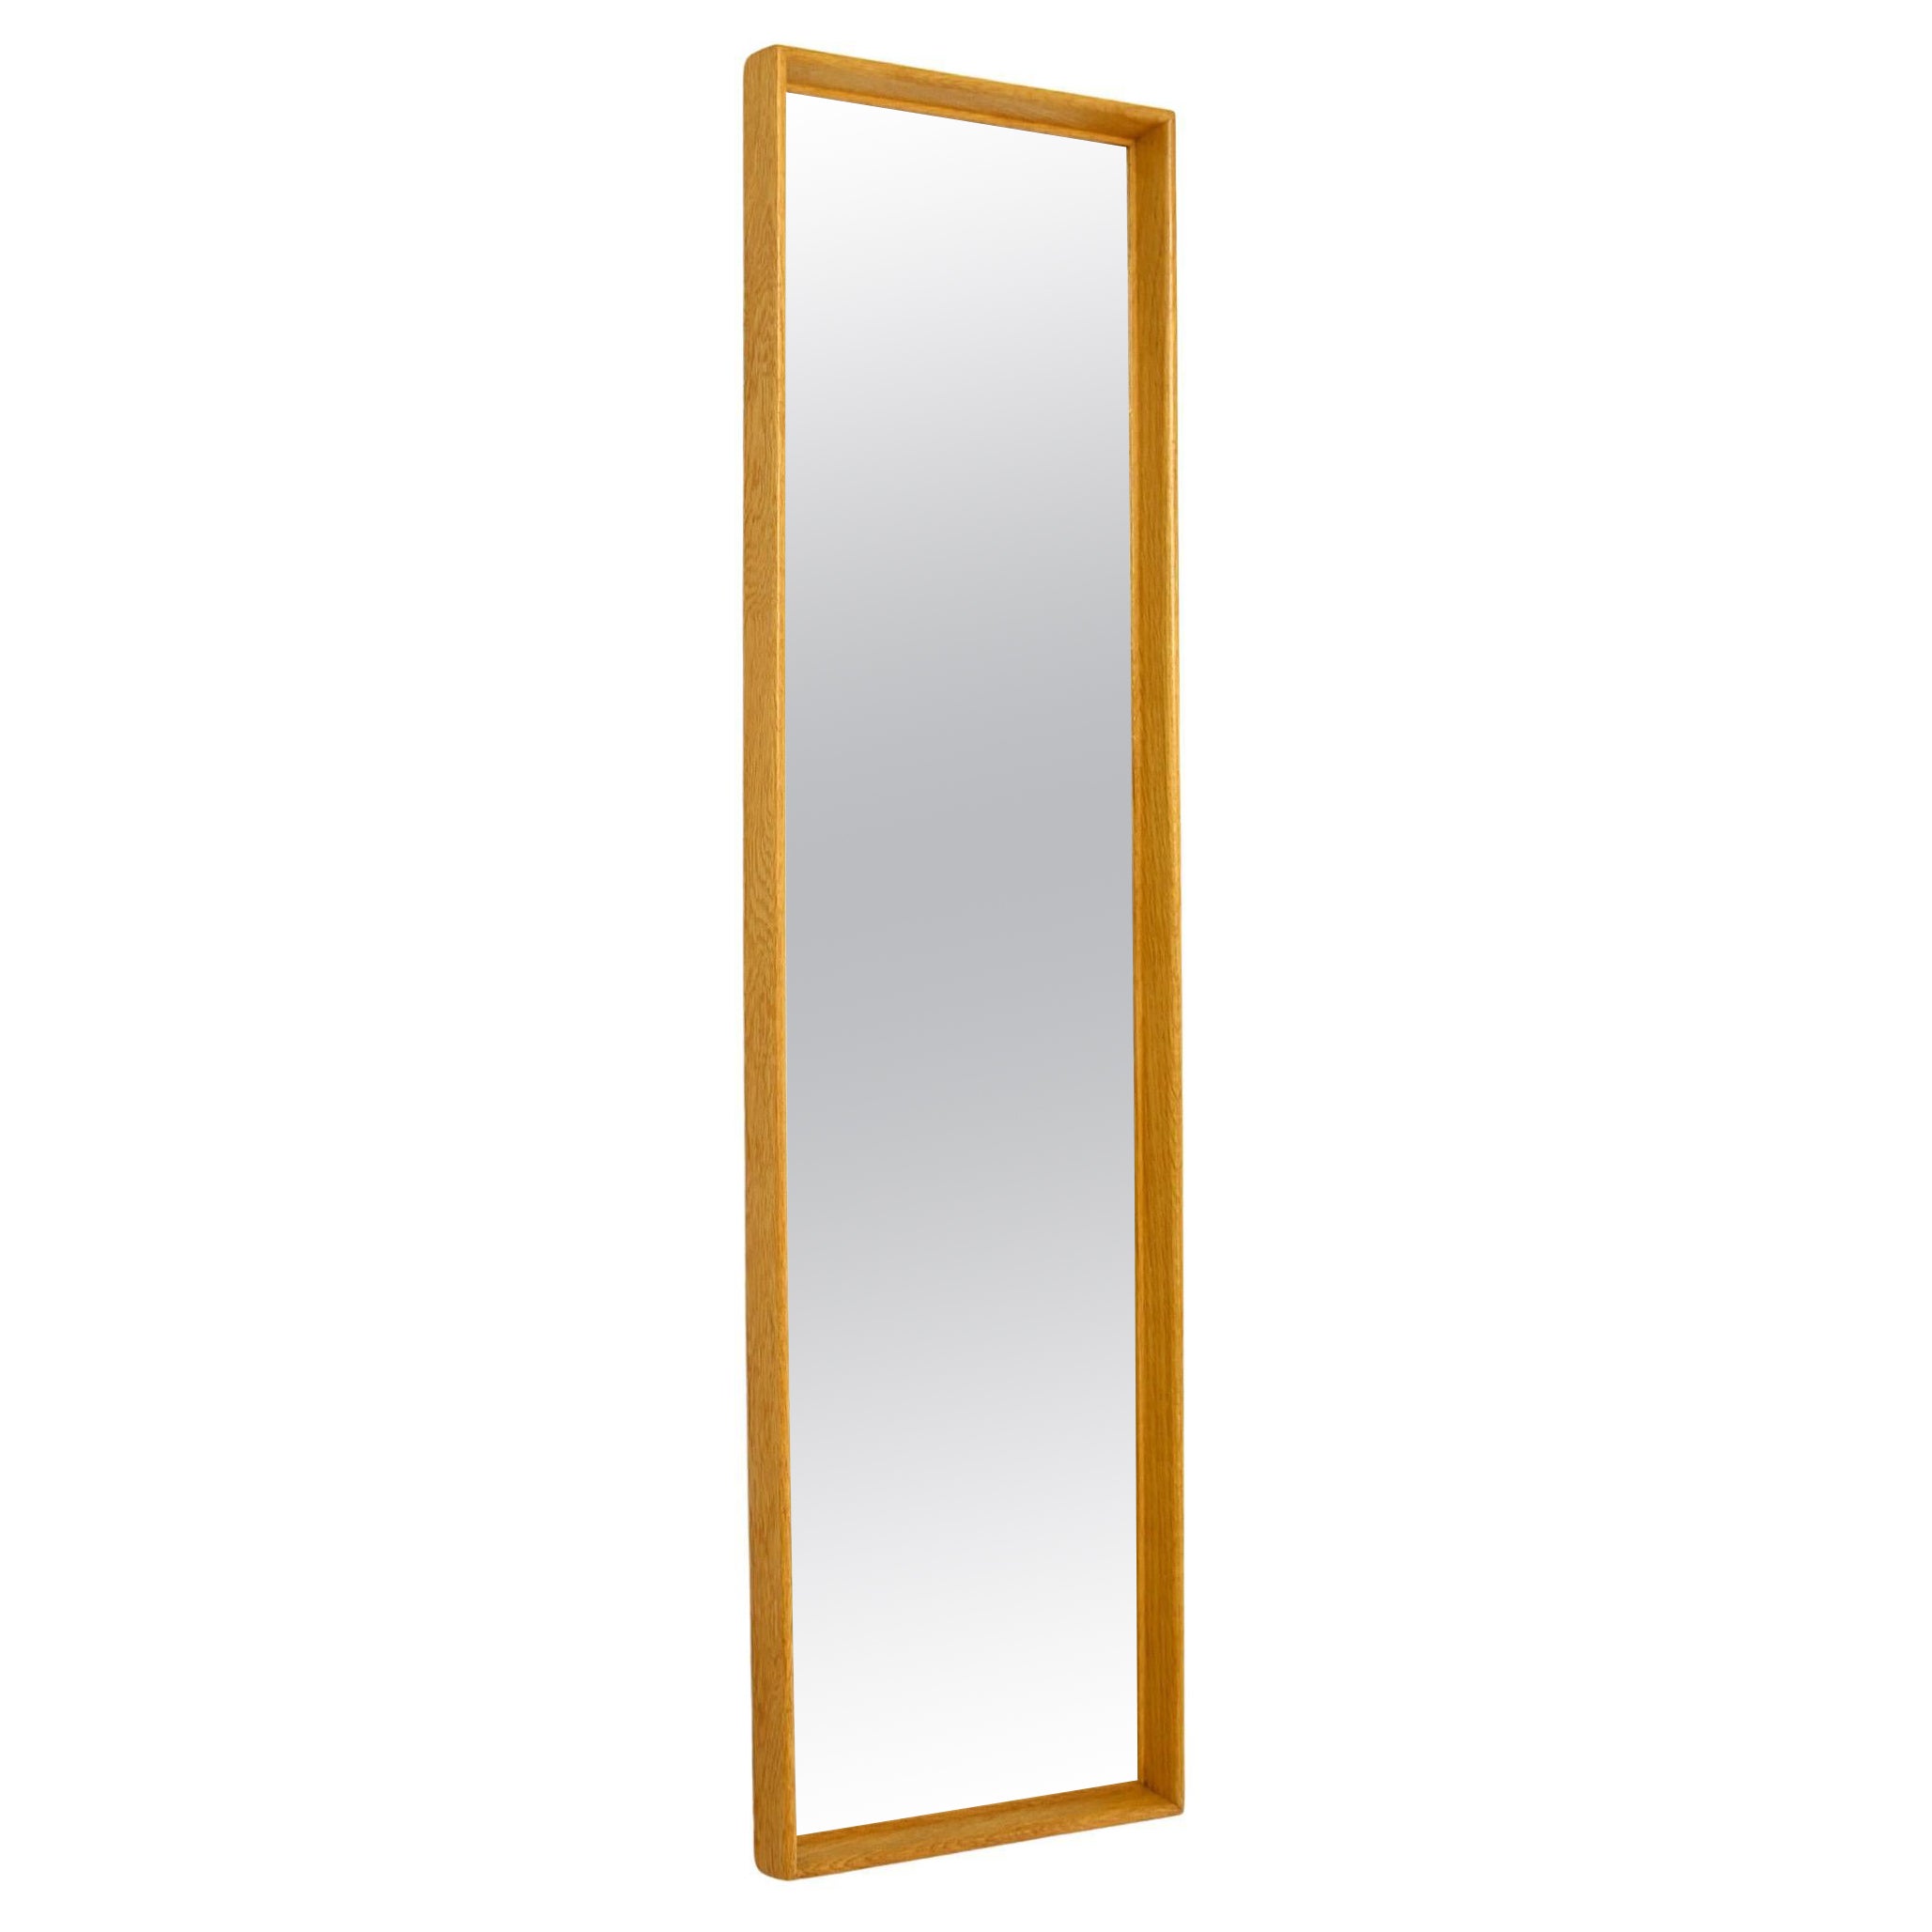 Scandinavian rectangular mirror